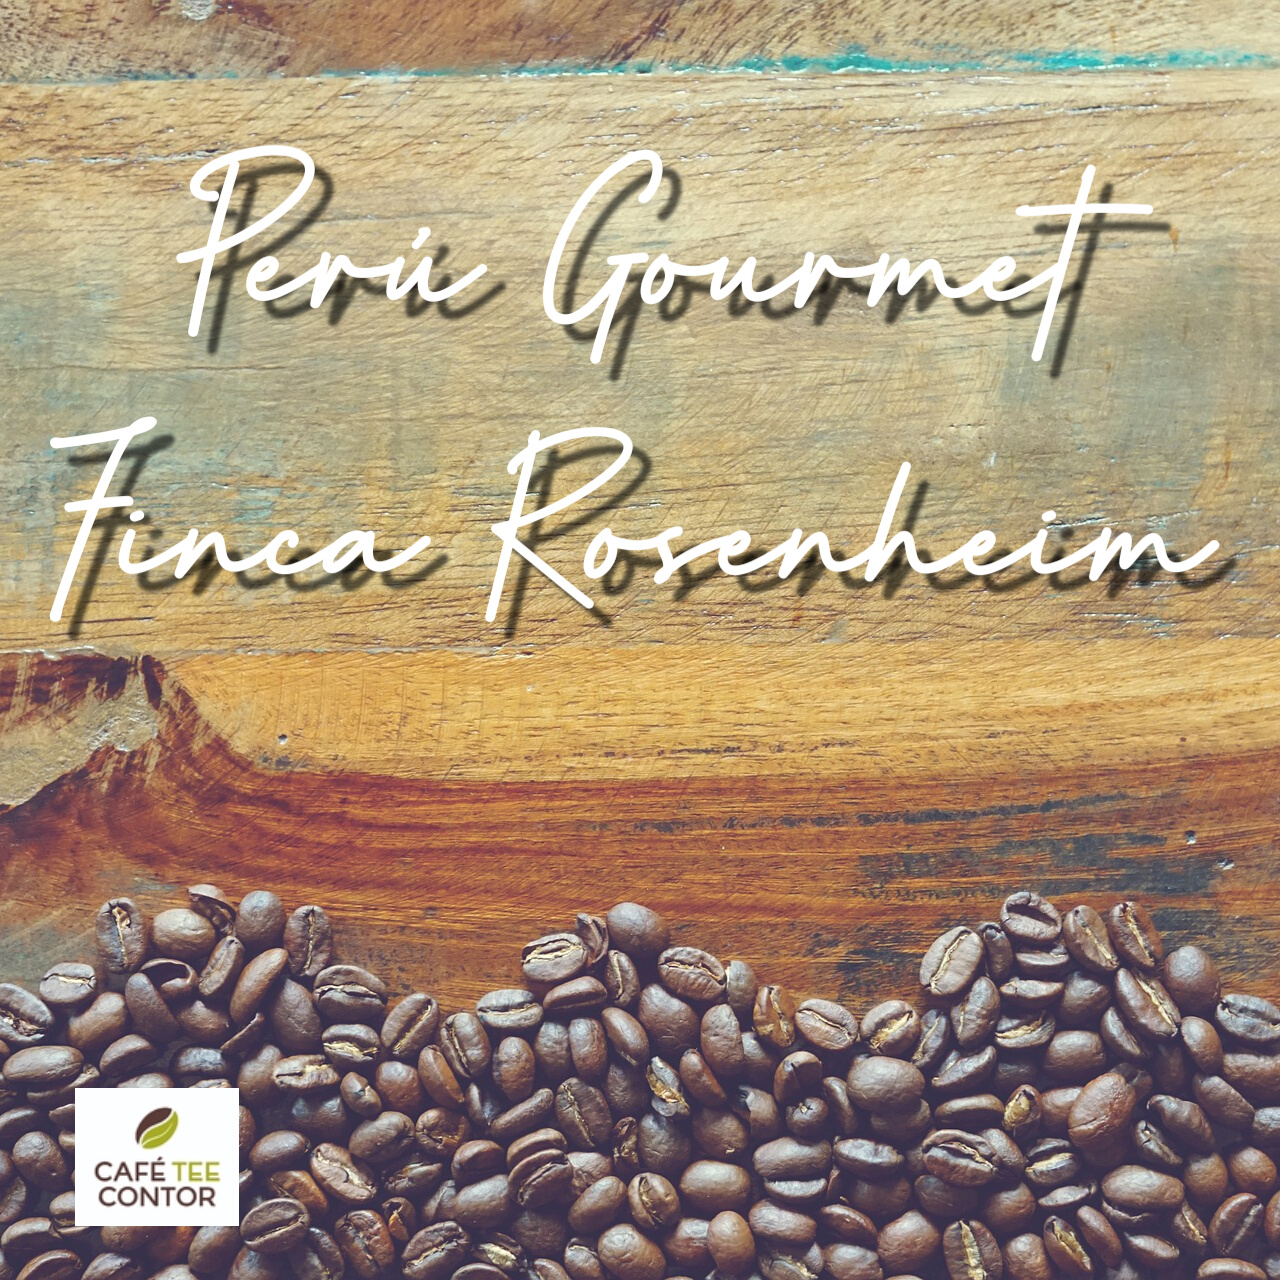 Kaffee Perú Gourmet Finca Rosenheim